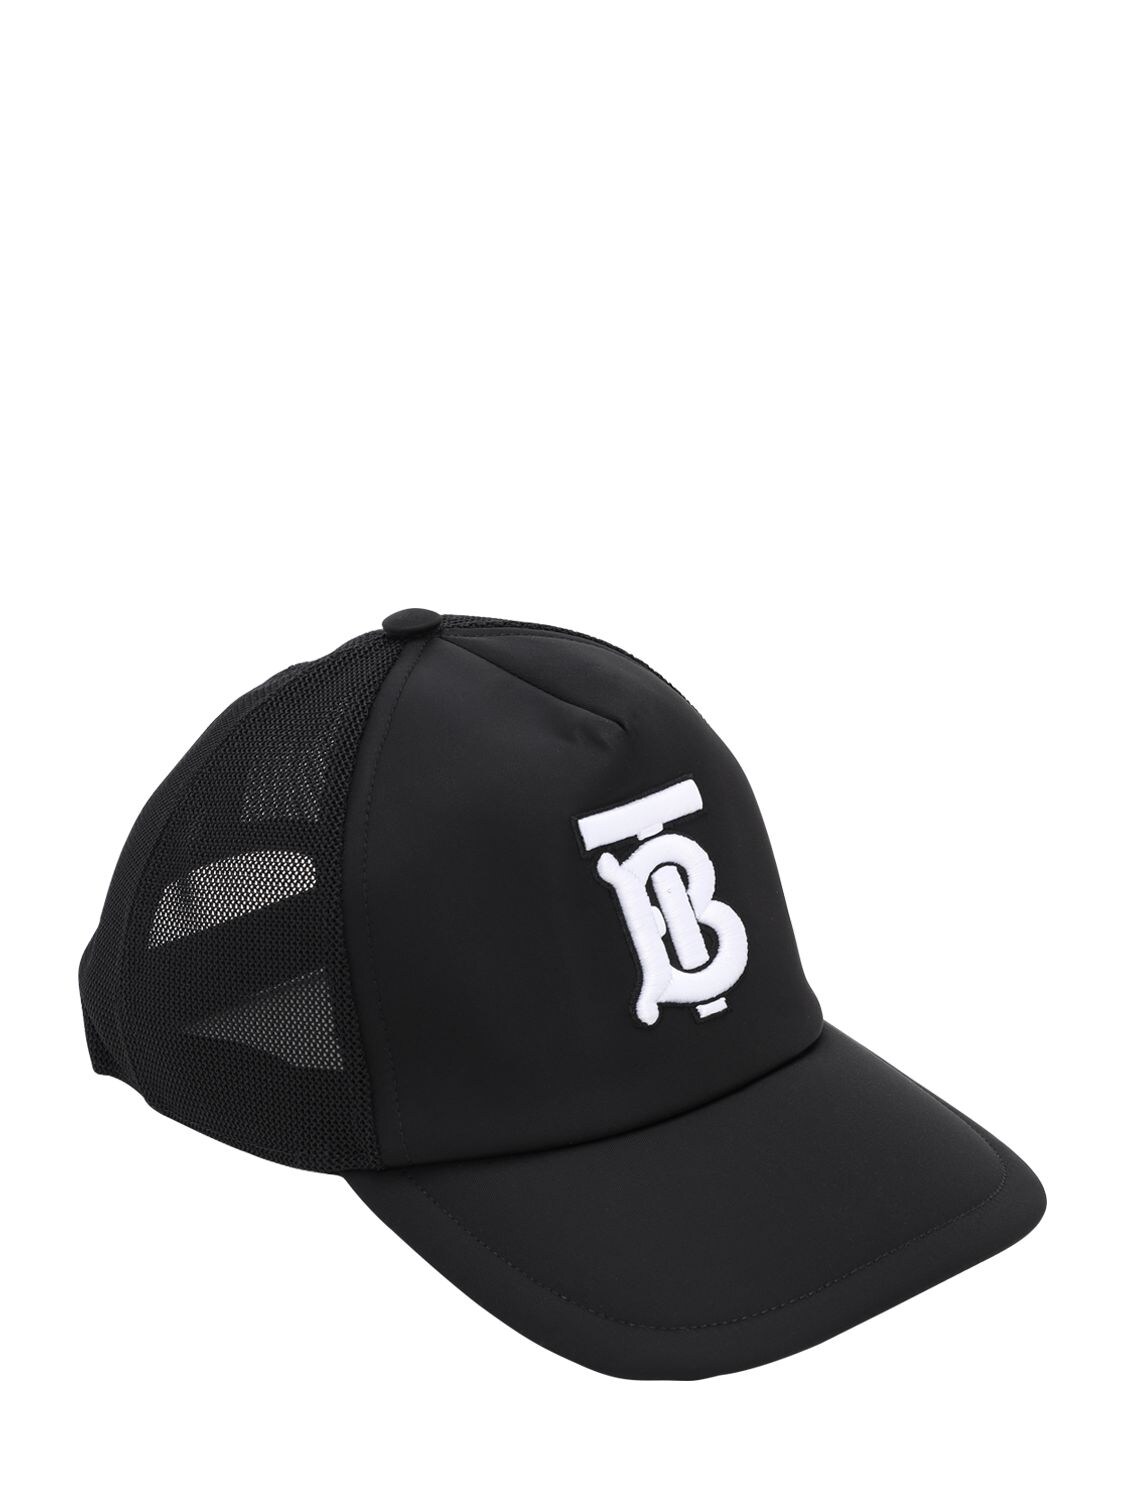 BURBERRY LOGO刺绣尼龙棒球帽,70IJT0055-QTEXODK1